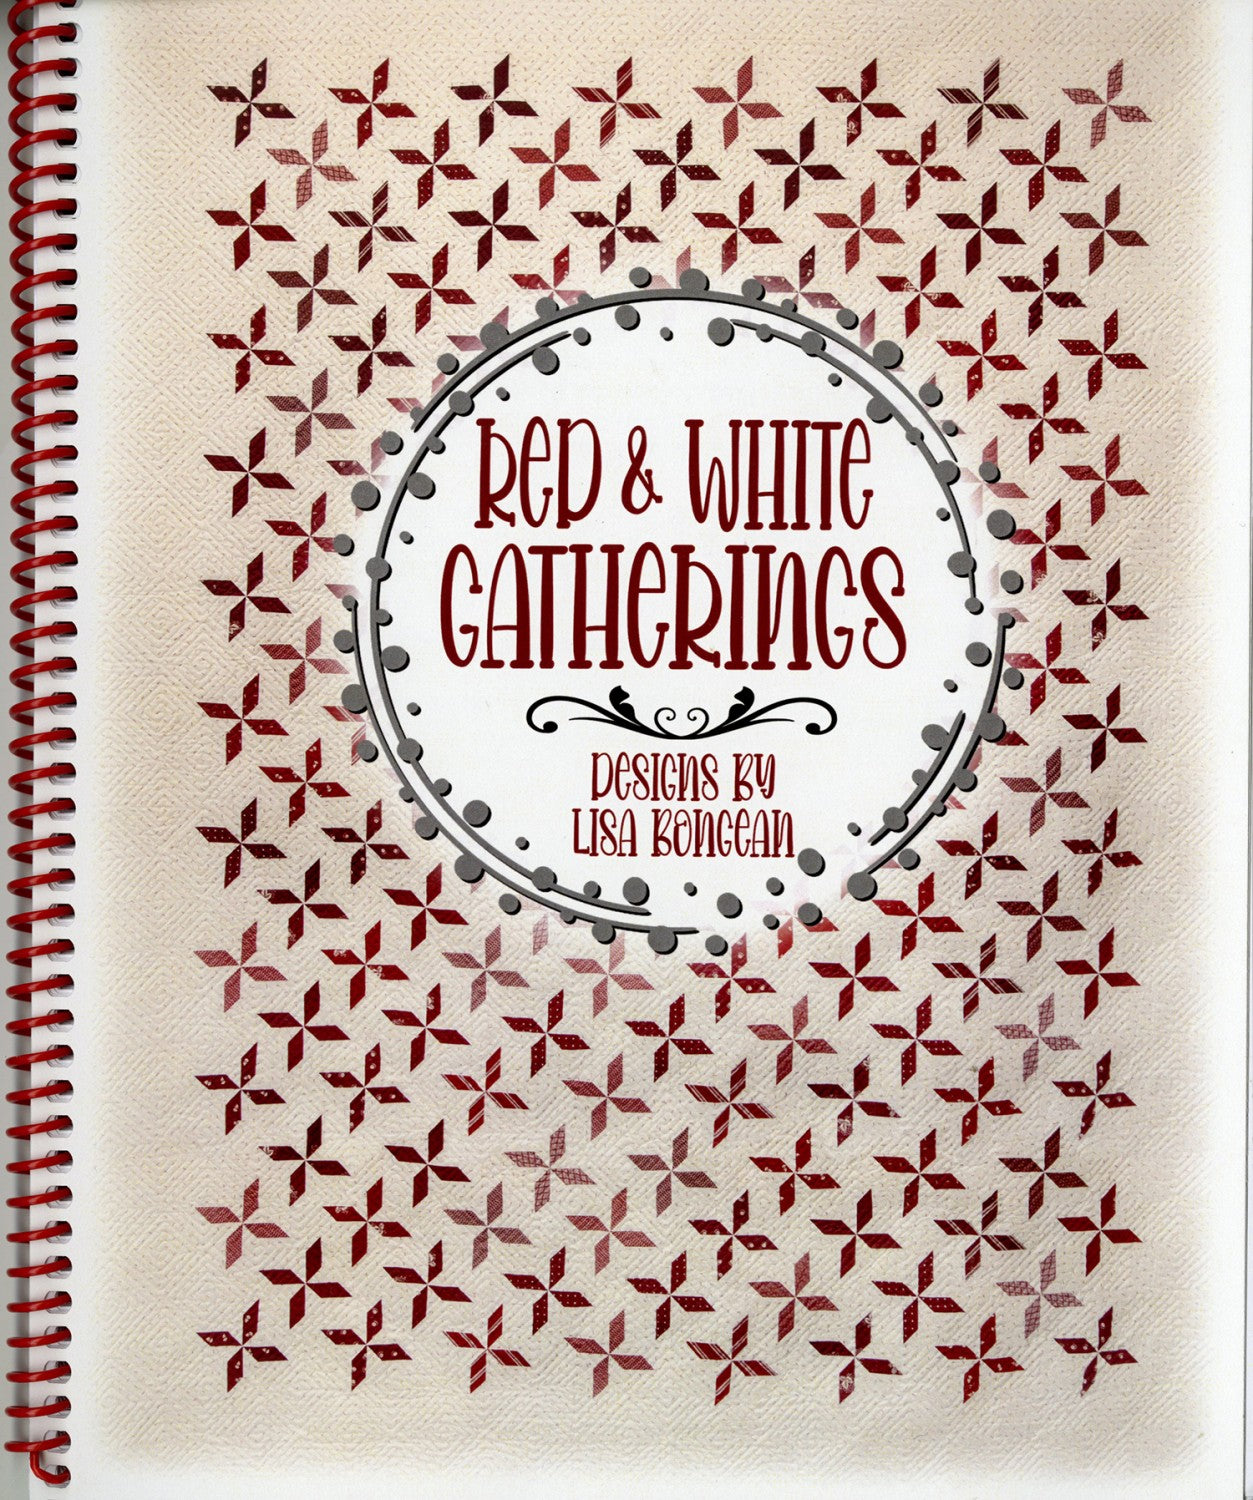 Red & White Gatherings by Lisa Bongean of Primitive Gatherings